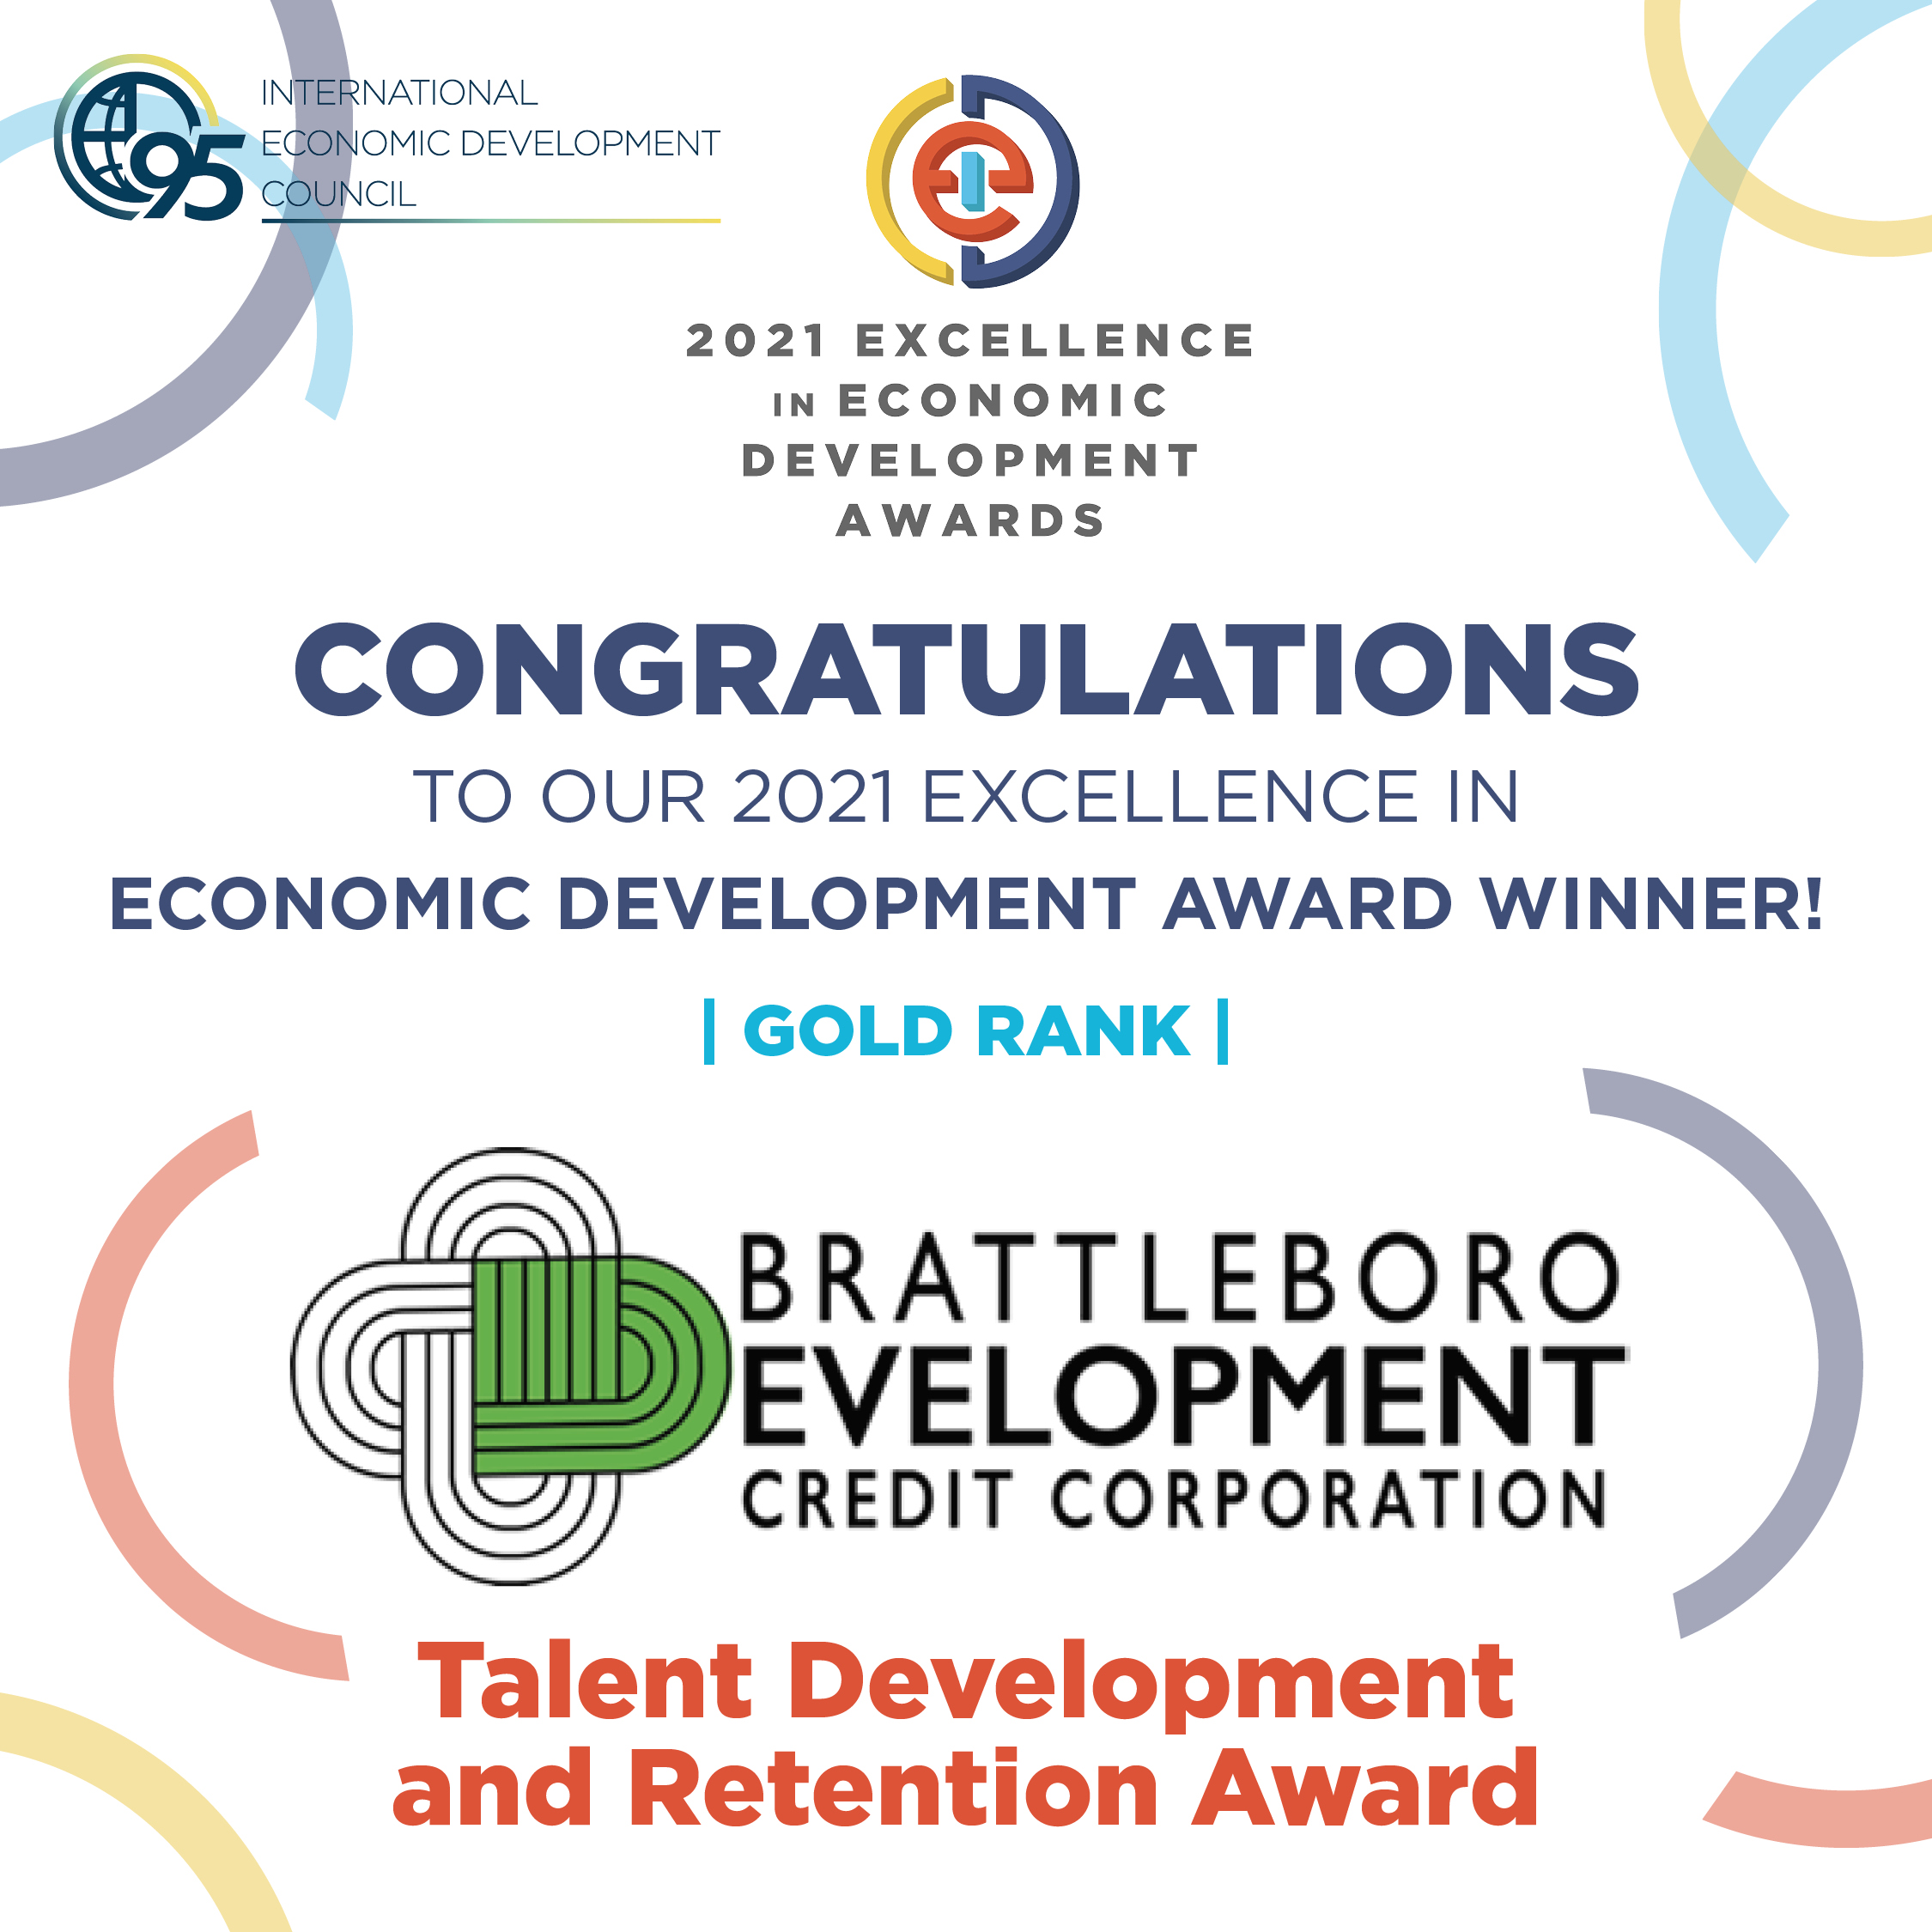 Brattleboro Development Credit Corporation Receives Excellence in Economic Development Award from the International Economic Development Council